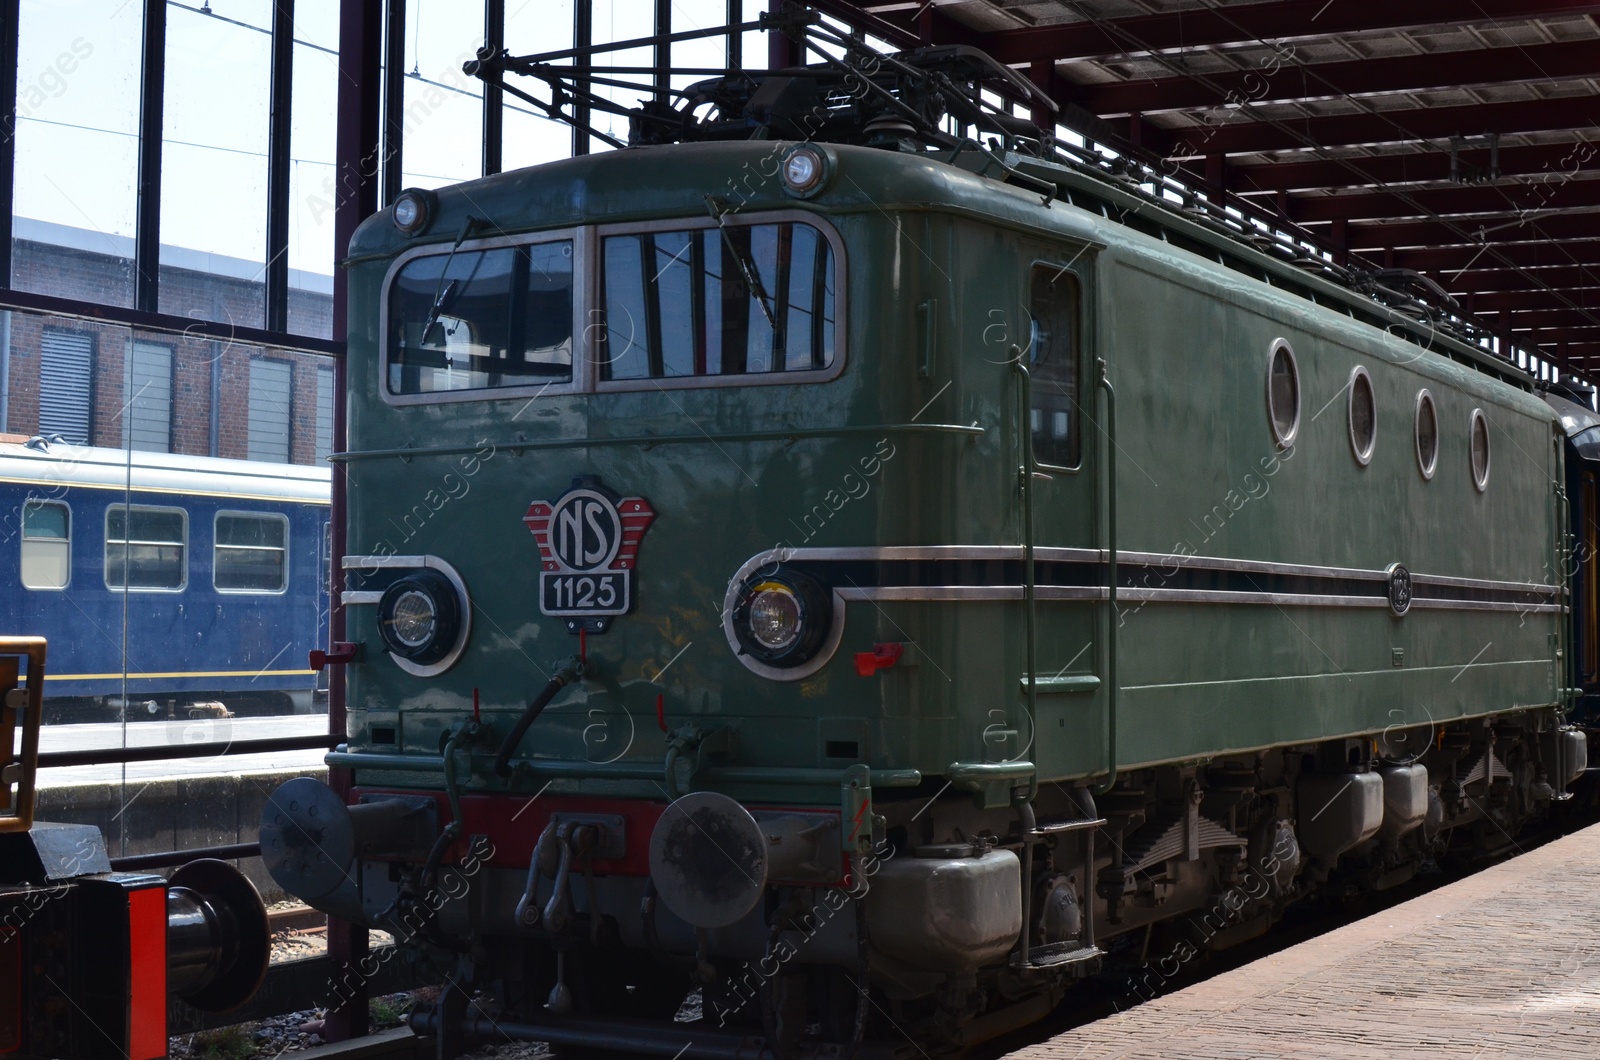 Photo of Utrecht, Netherlands - July 23, 2022: Old train on display in Spoorwegmuseum